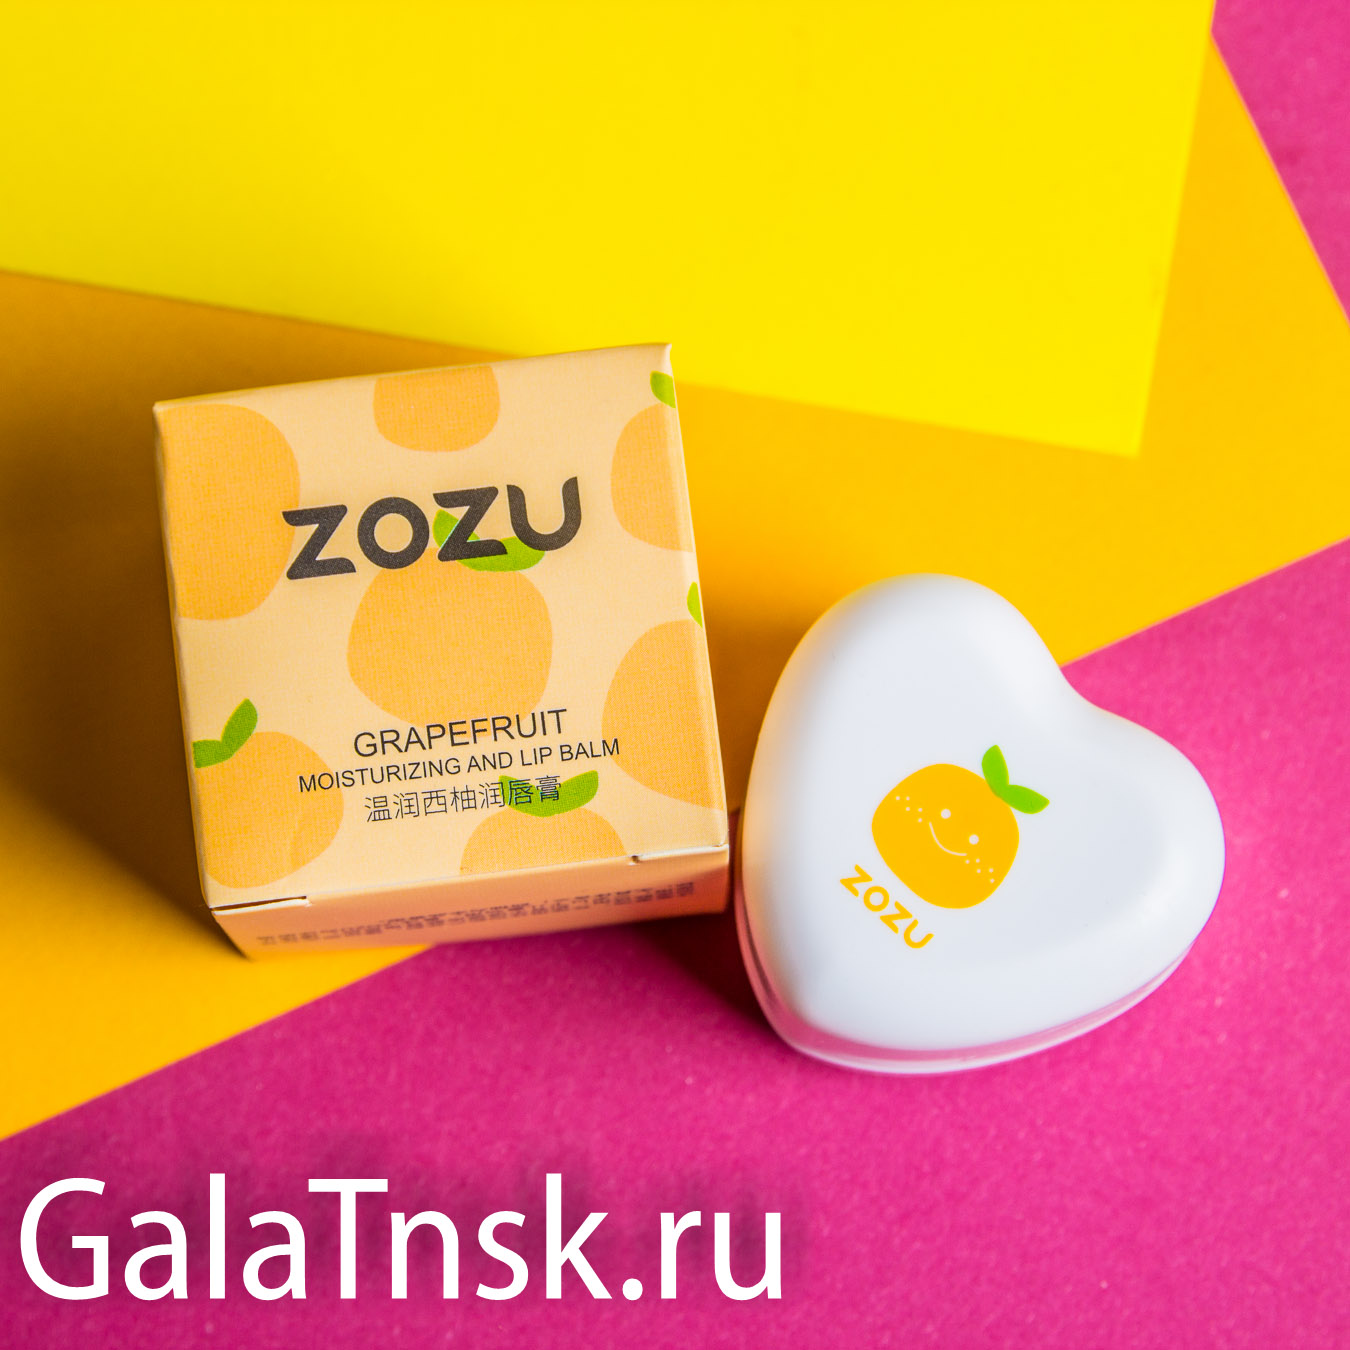 ZOZU Бальзам для губ GRAPEFRUIT Moisturizing and Lip Balm 5.8g